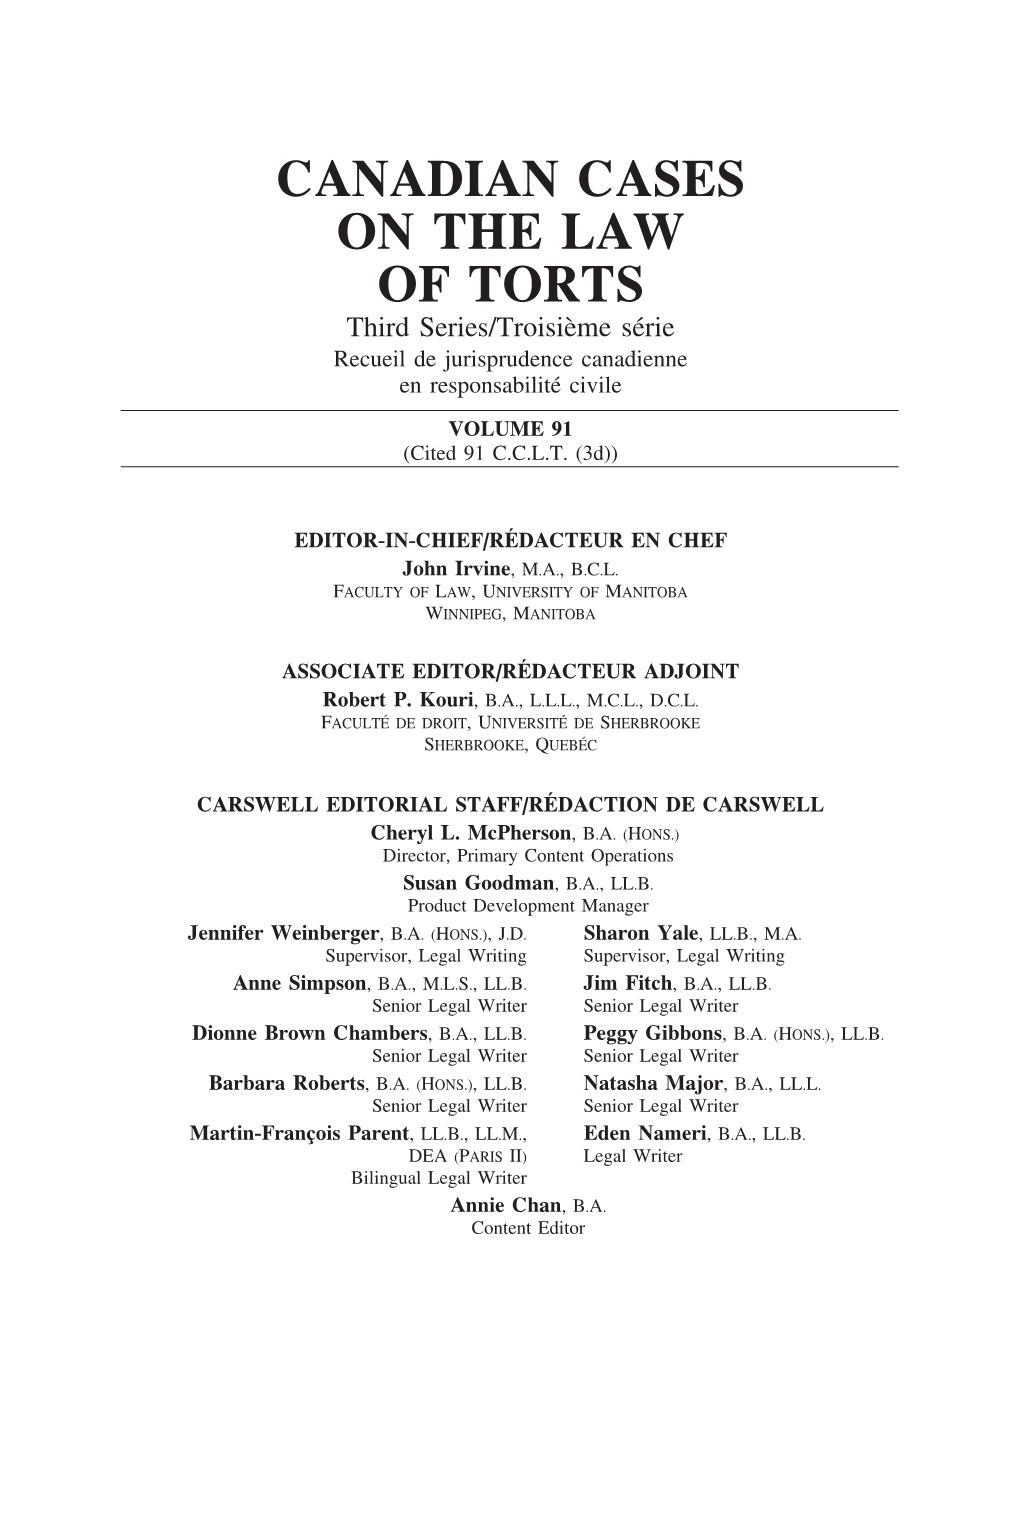 CANADIAN CASES on the LAW of TORTS Third Series/Troisi`Eme S´Erie Recueil De Jurisprudence Canadienne En Responsabilit´E Civile VOLUME 91 (Cited 91 C.C.L.T